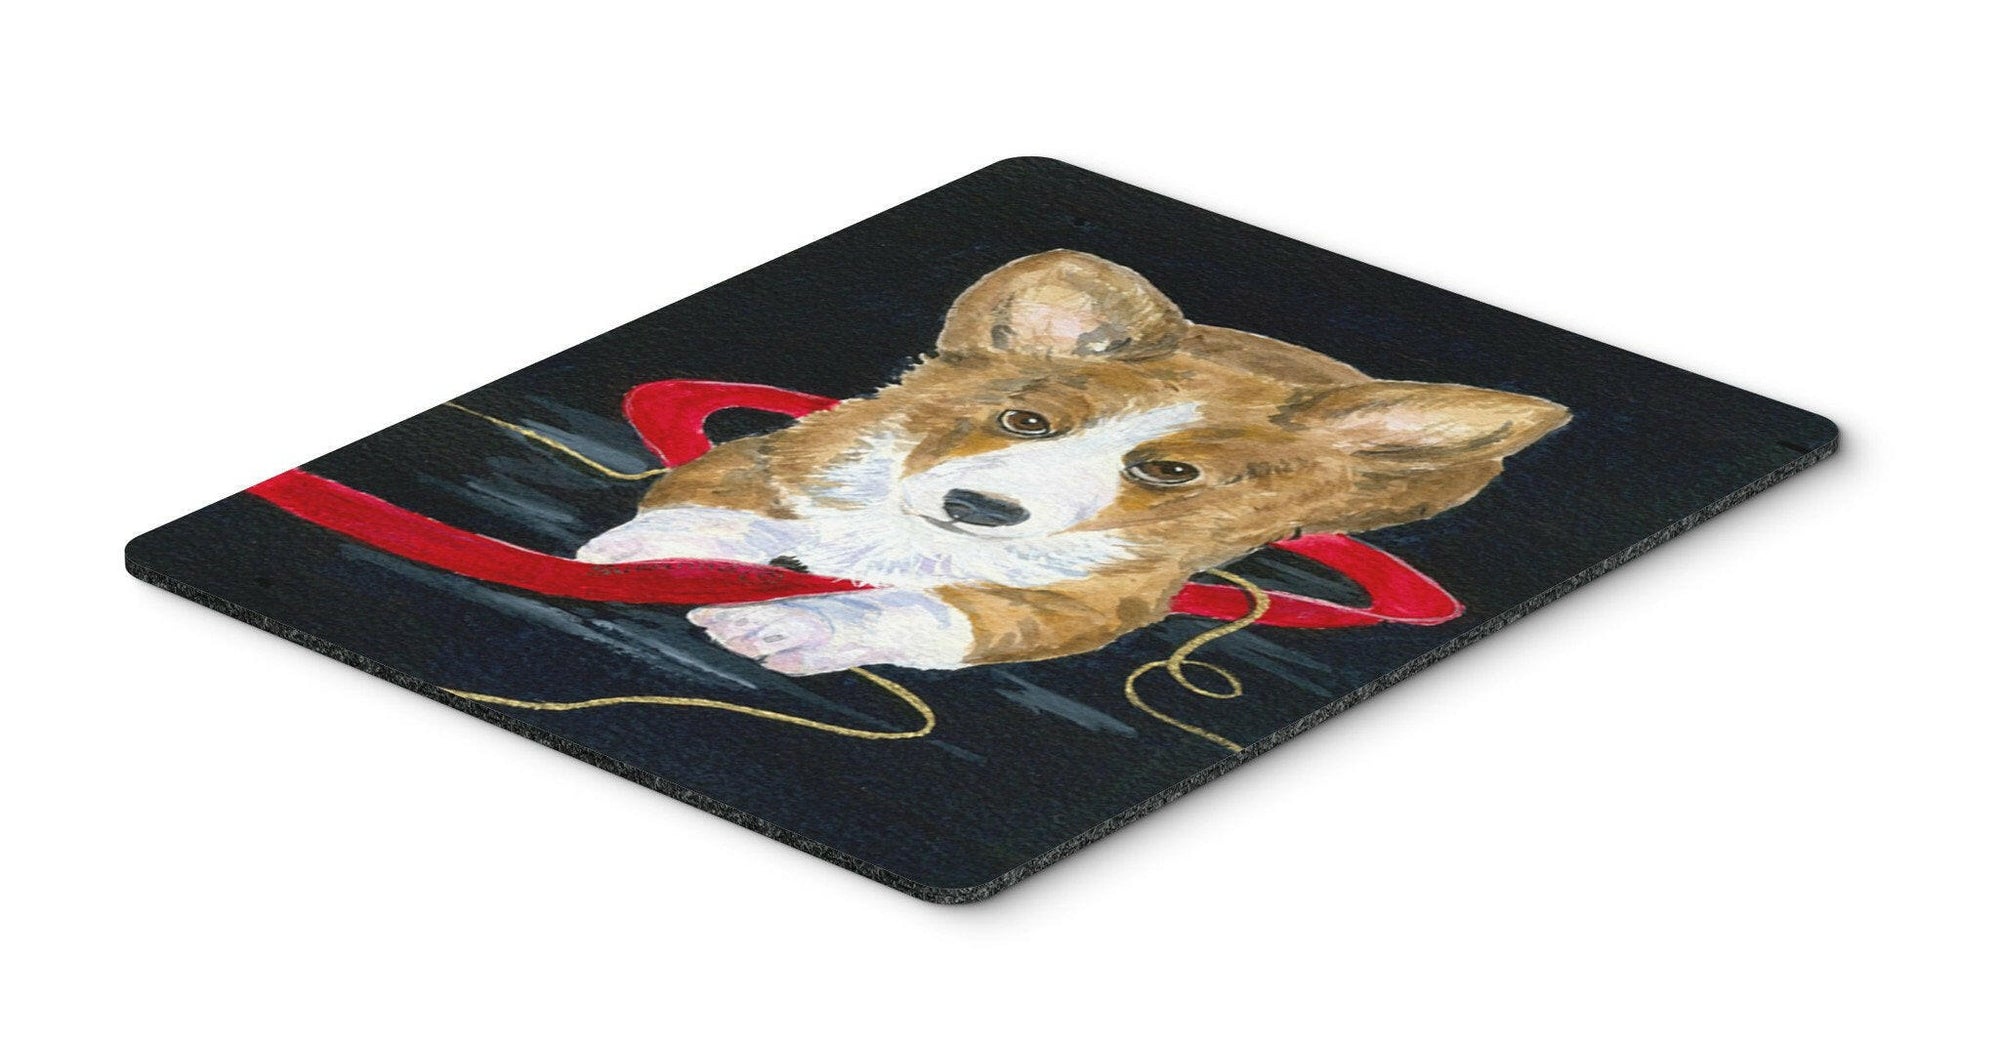 Corgi Mouse Pad / Hot Pad / Trivet by Caroline's Treasures